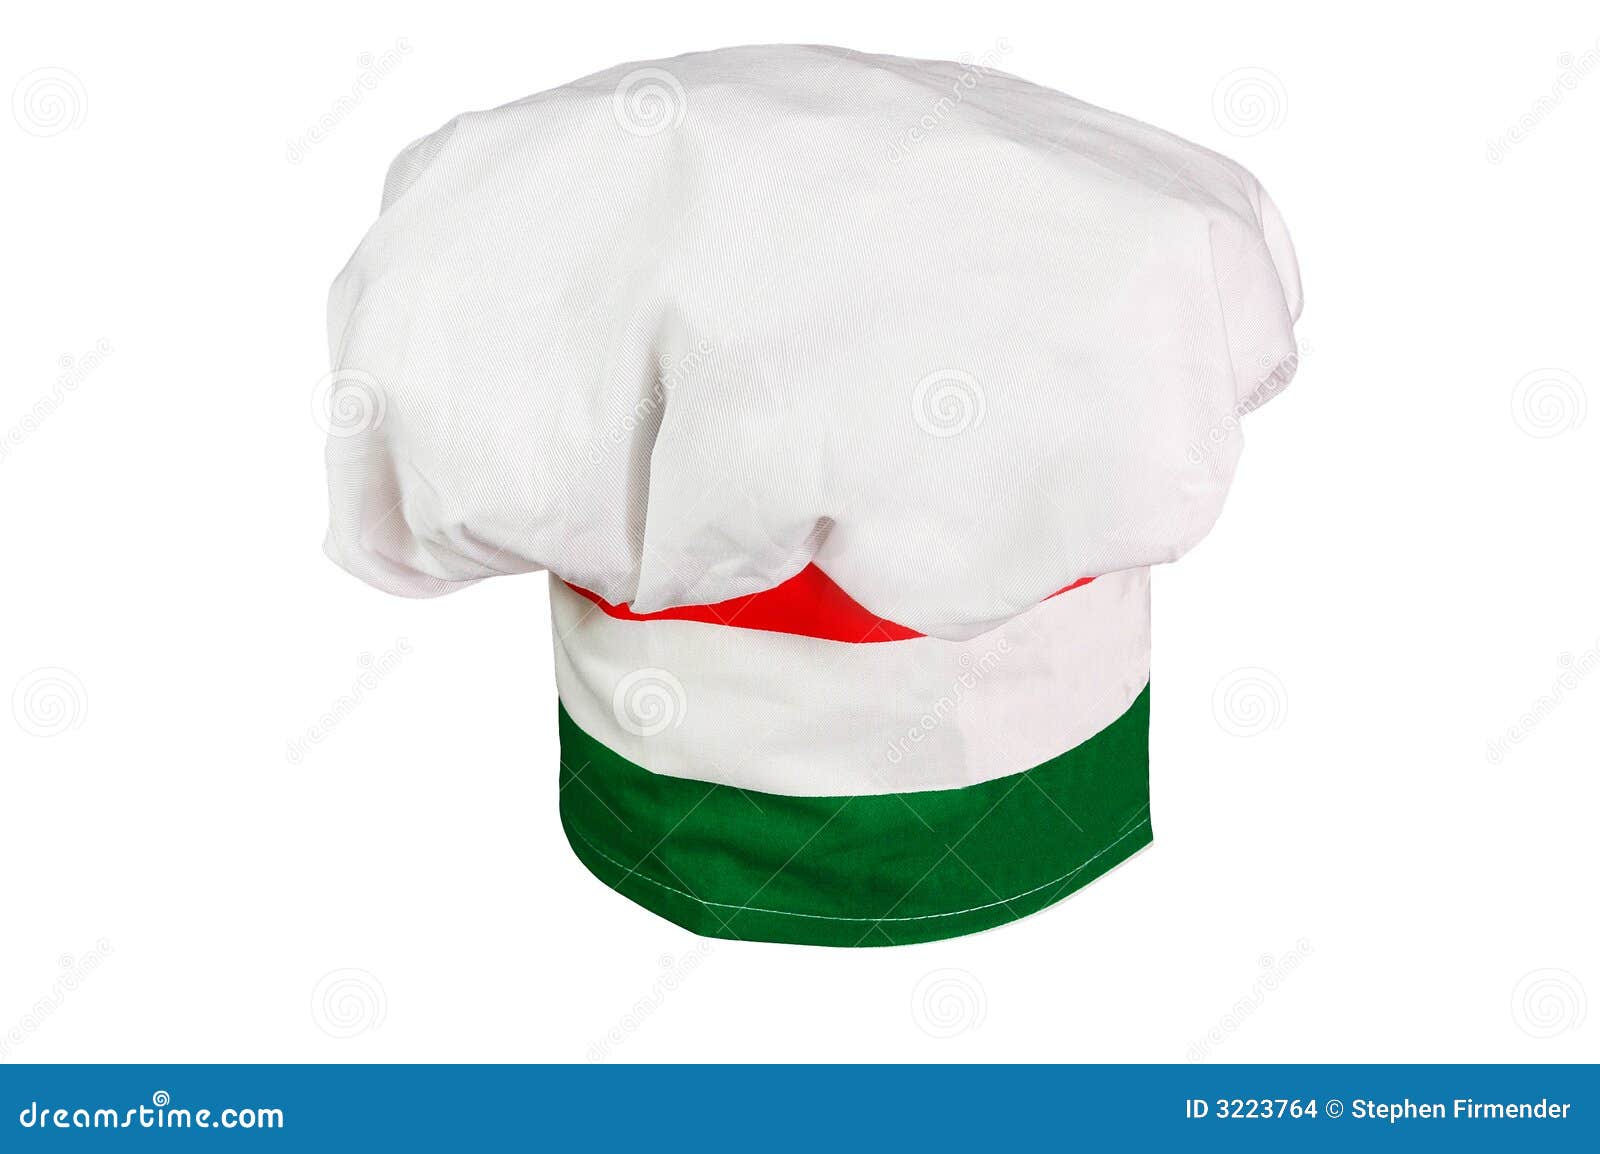 italian-chef-s-hat-3223764.jpg